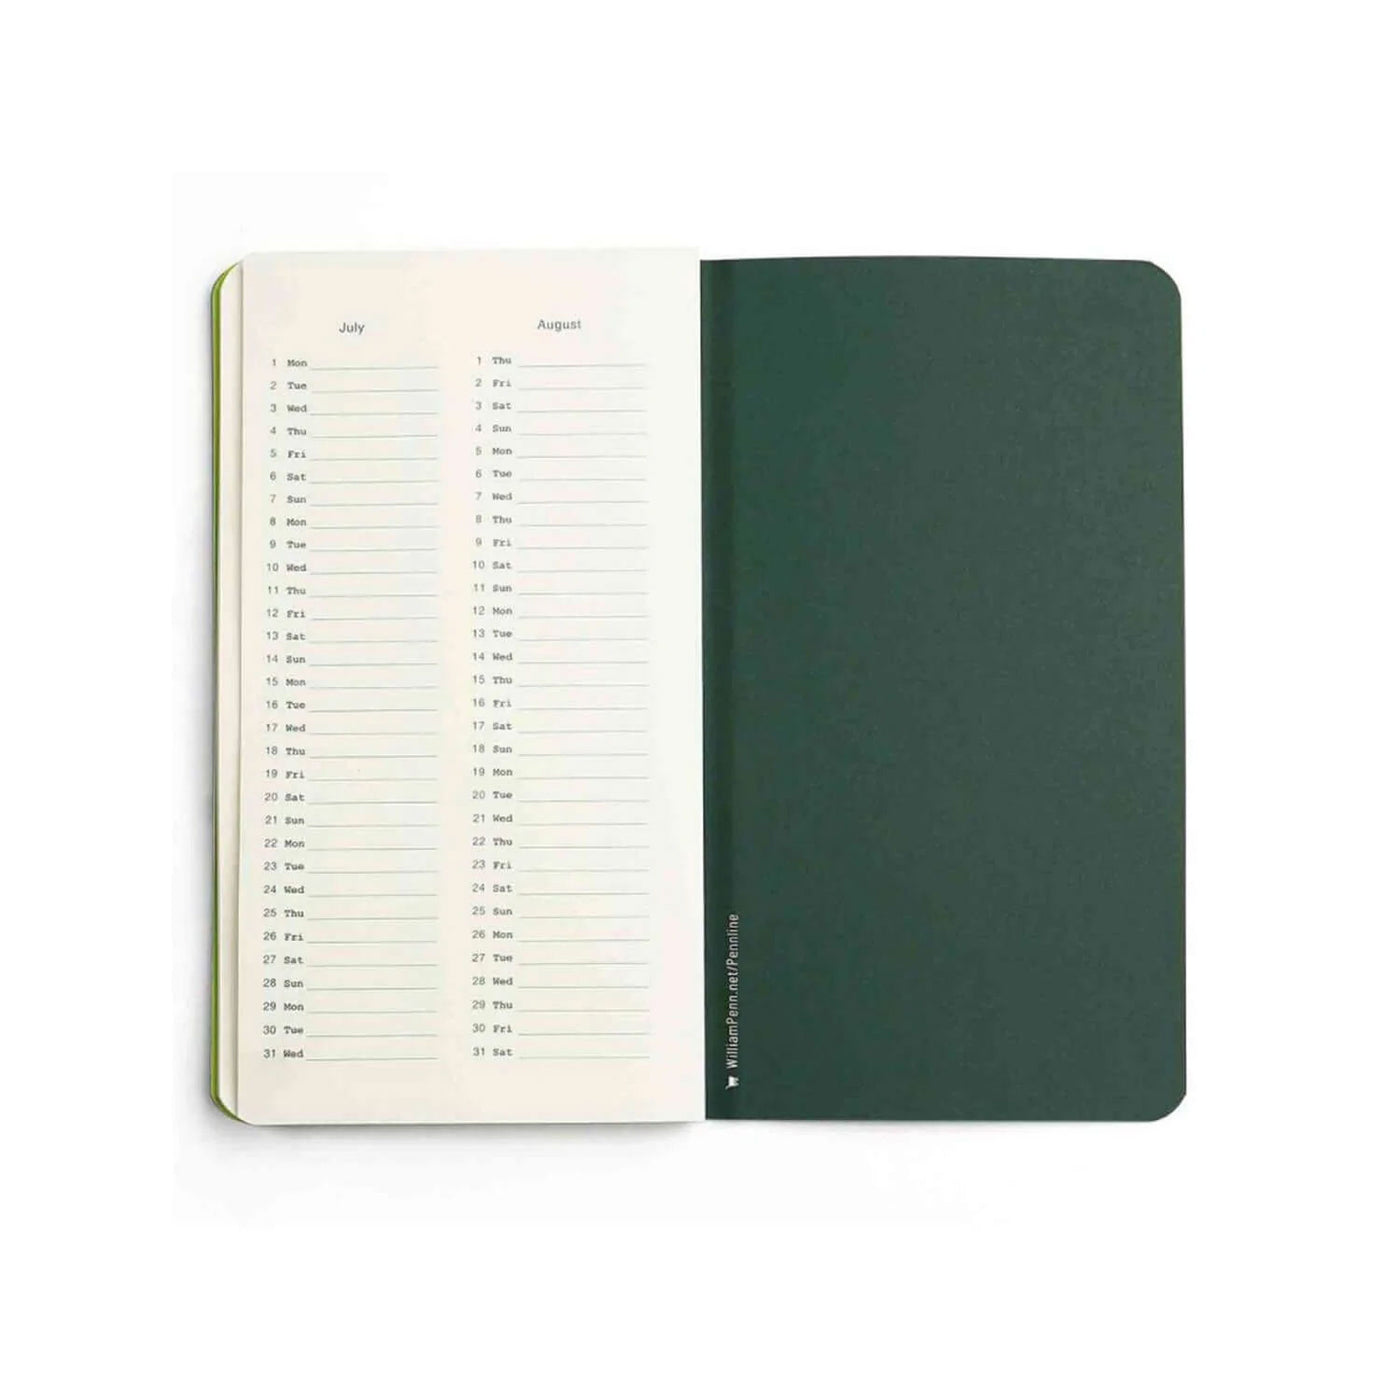 Pennline Quikfill Notebook Refill For Quikrite, Green - Set Of 2 5